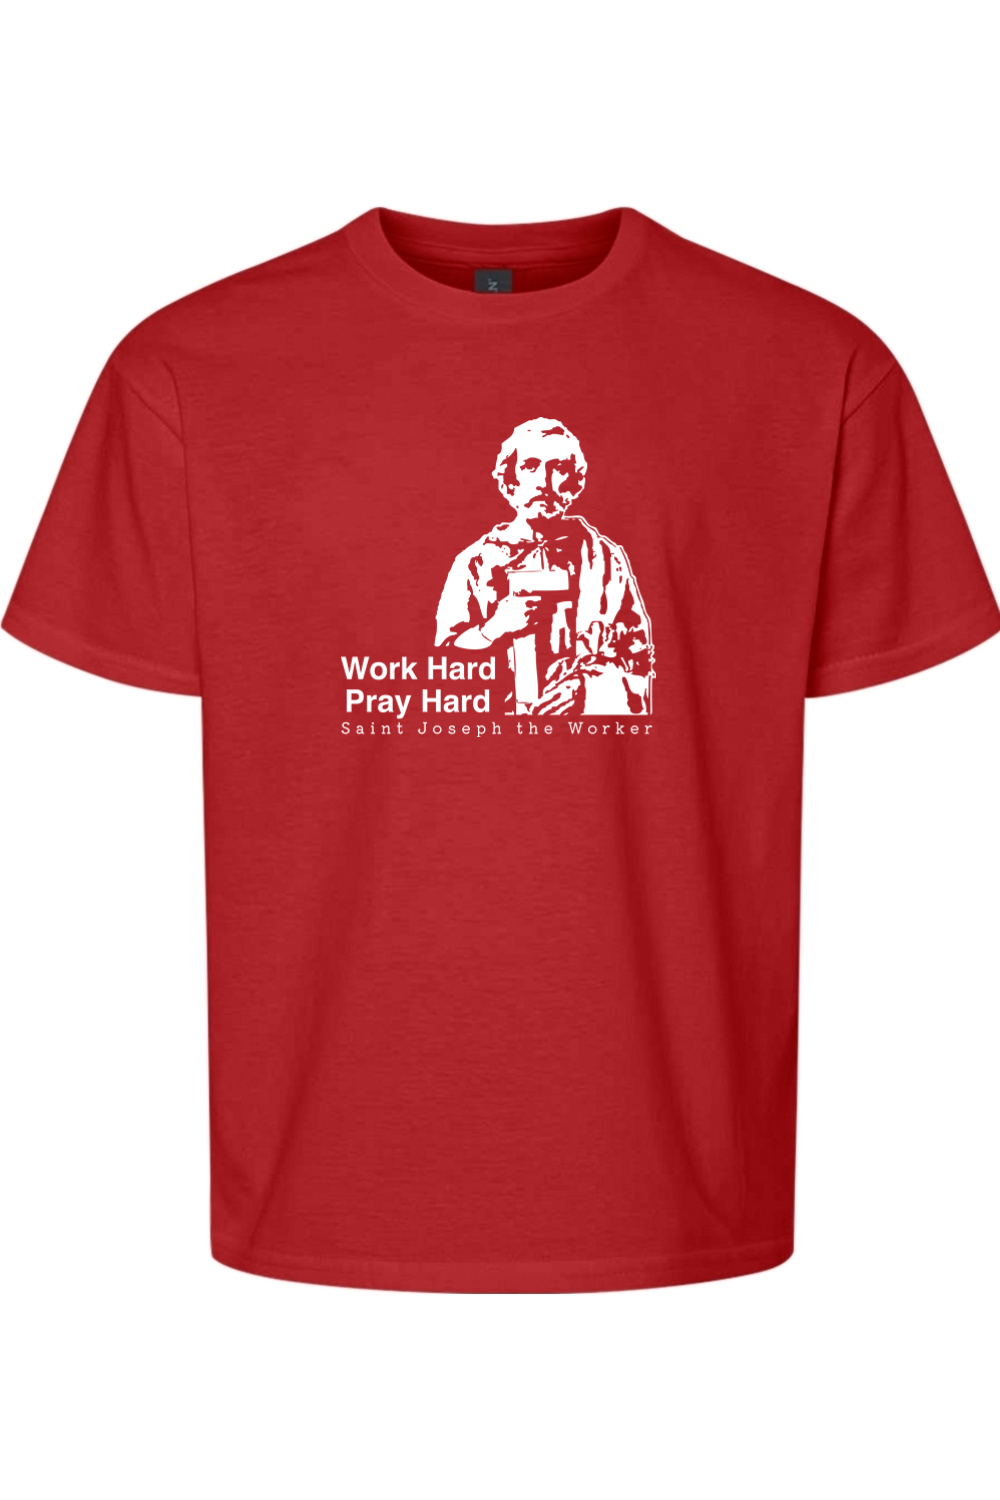 Work Hard Pray Hard - St Joseph the Worker Youth T-Shirt